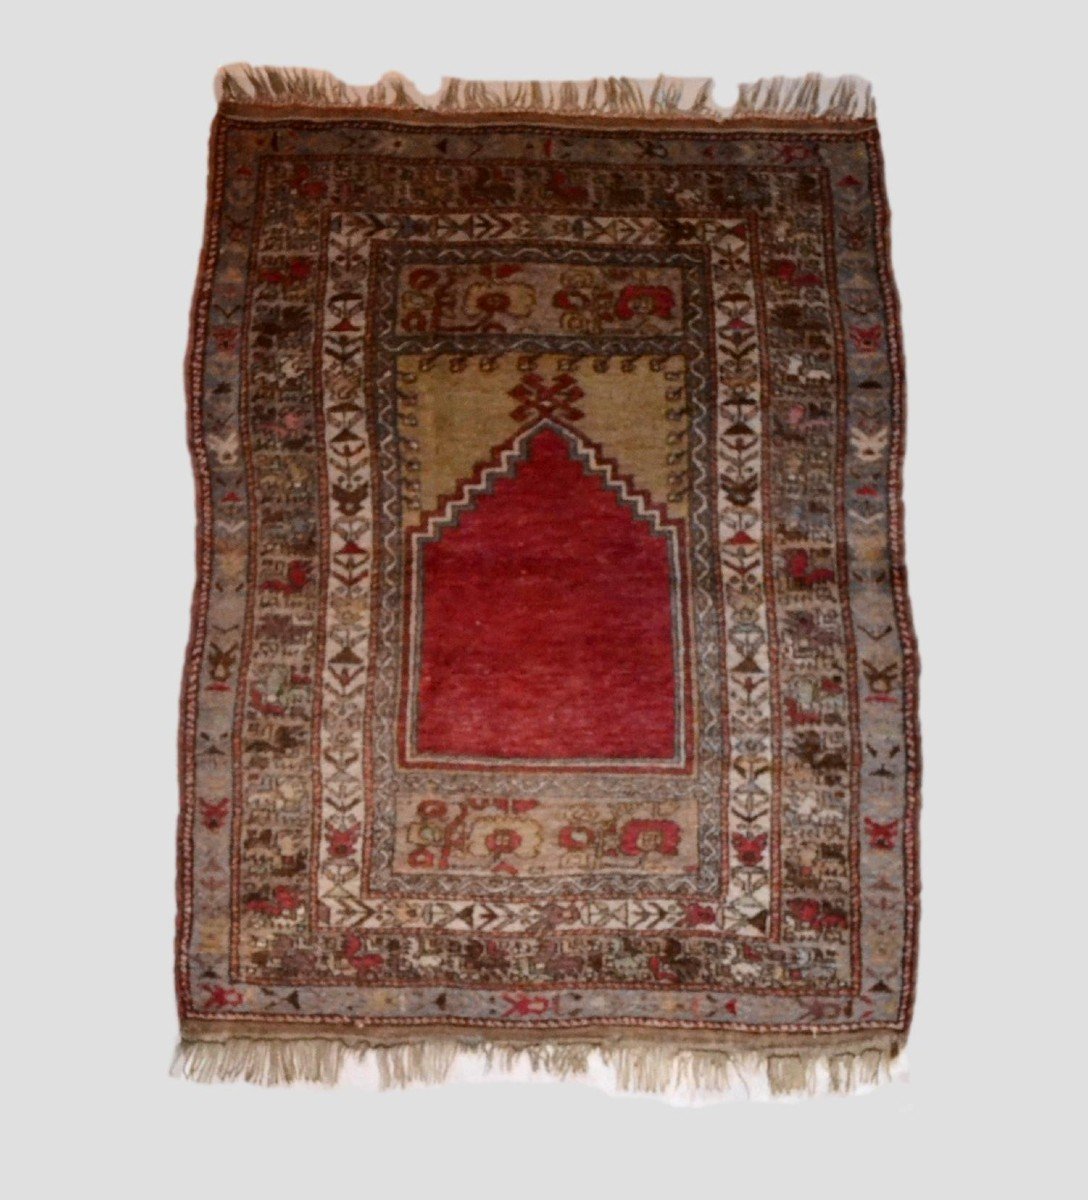 Obruk Rug, Yuruk Tribe, 133 X 174 Cm, Hand-knotted Wool On Wool Circa 1900, Konya Region-photo-3